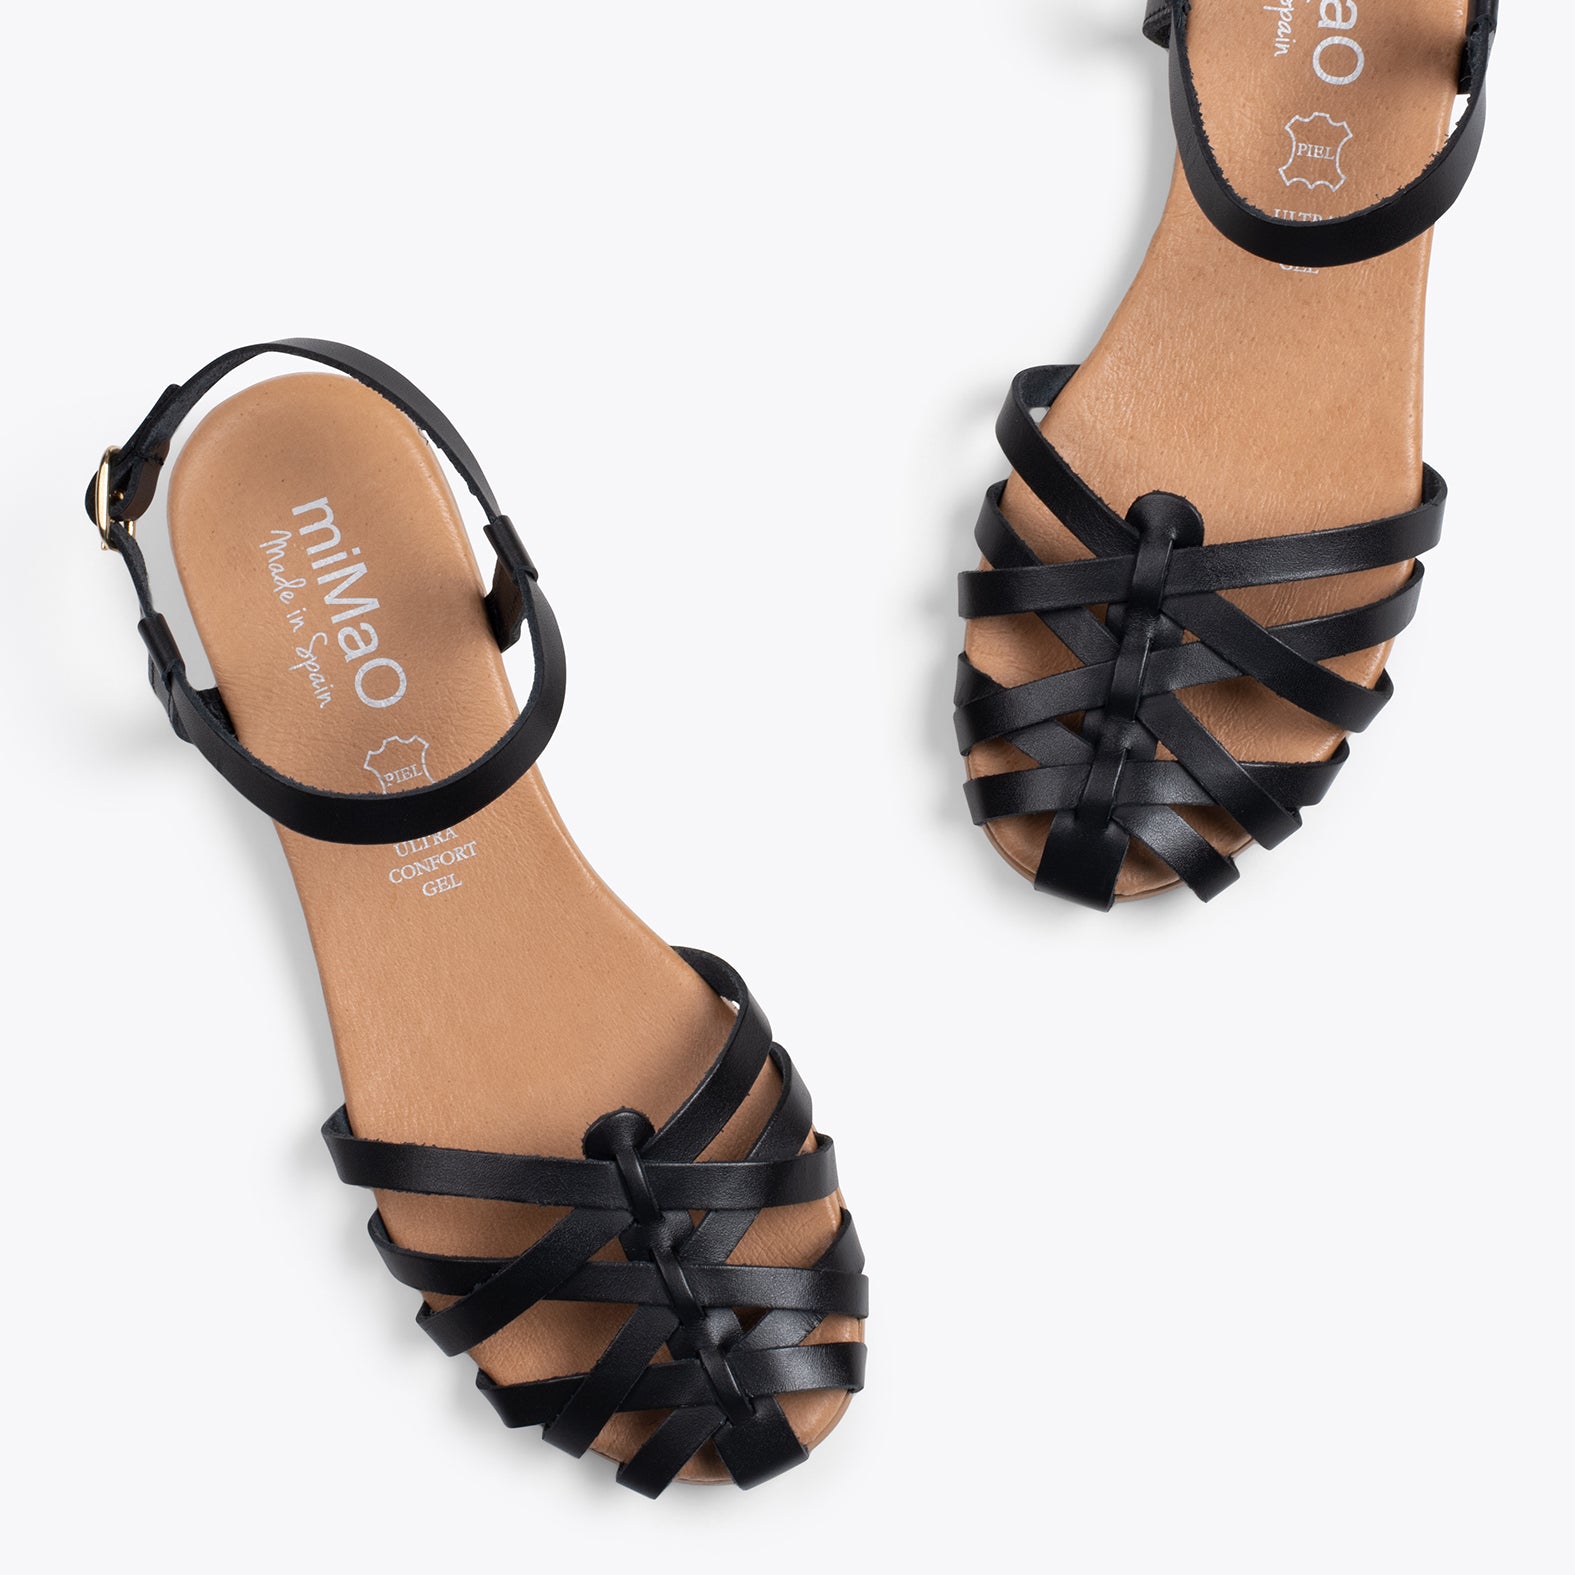 BEACH - BLACK sandal with straps